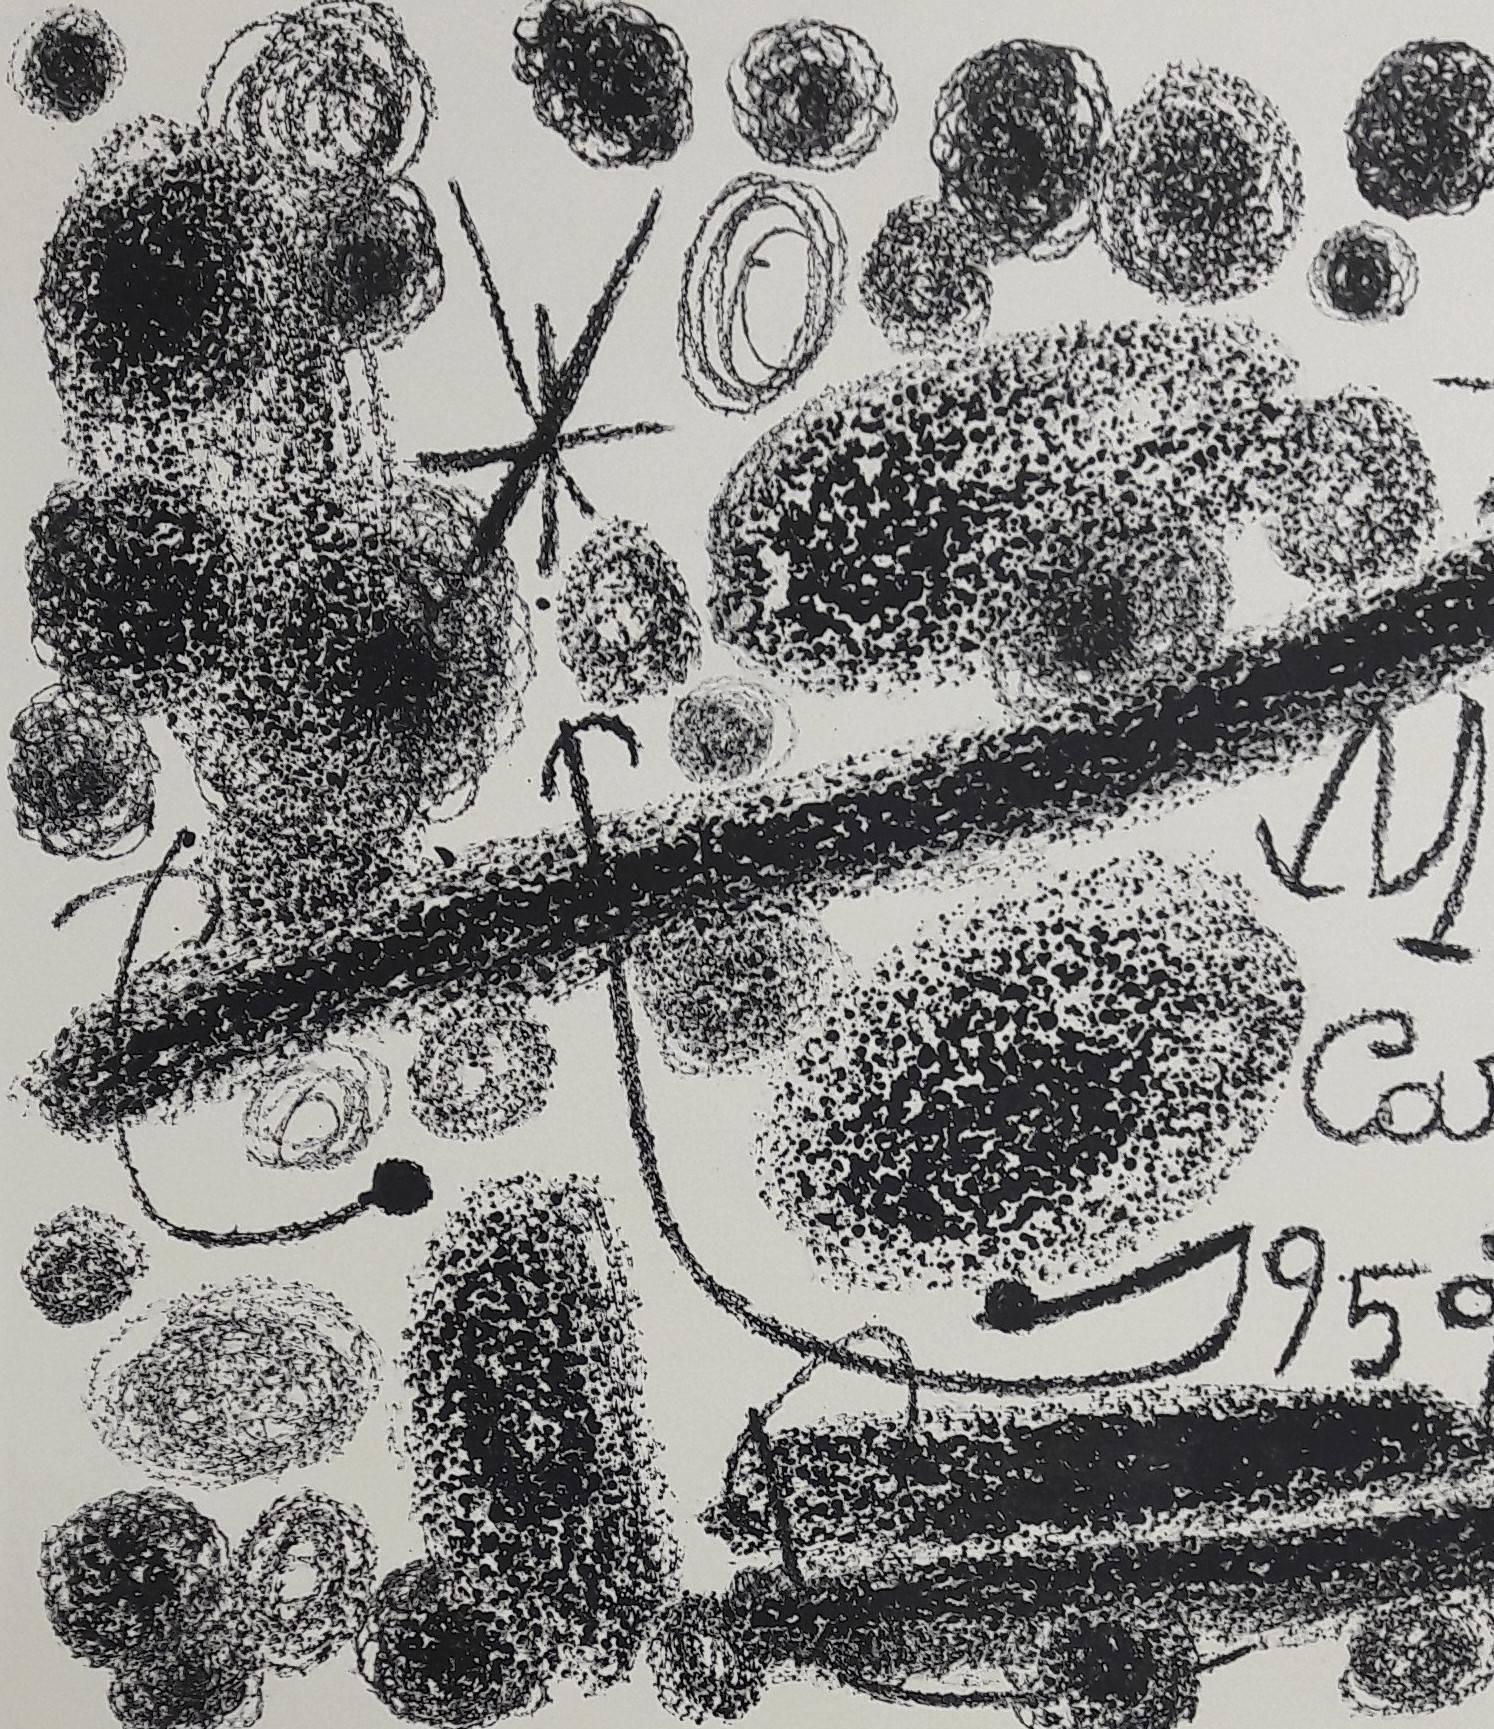 Cartones - Original Lithograph Handsigned - Gray Abstract Print by Joan Miró